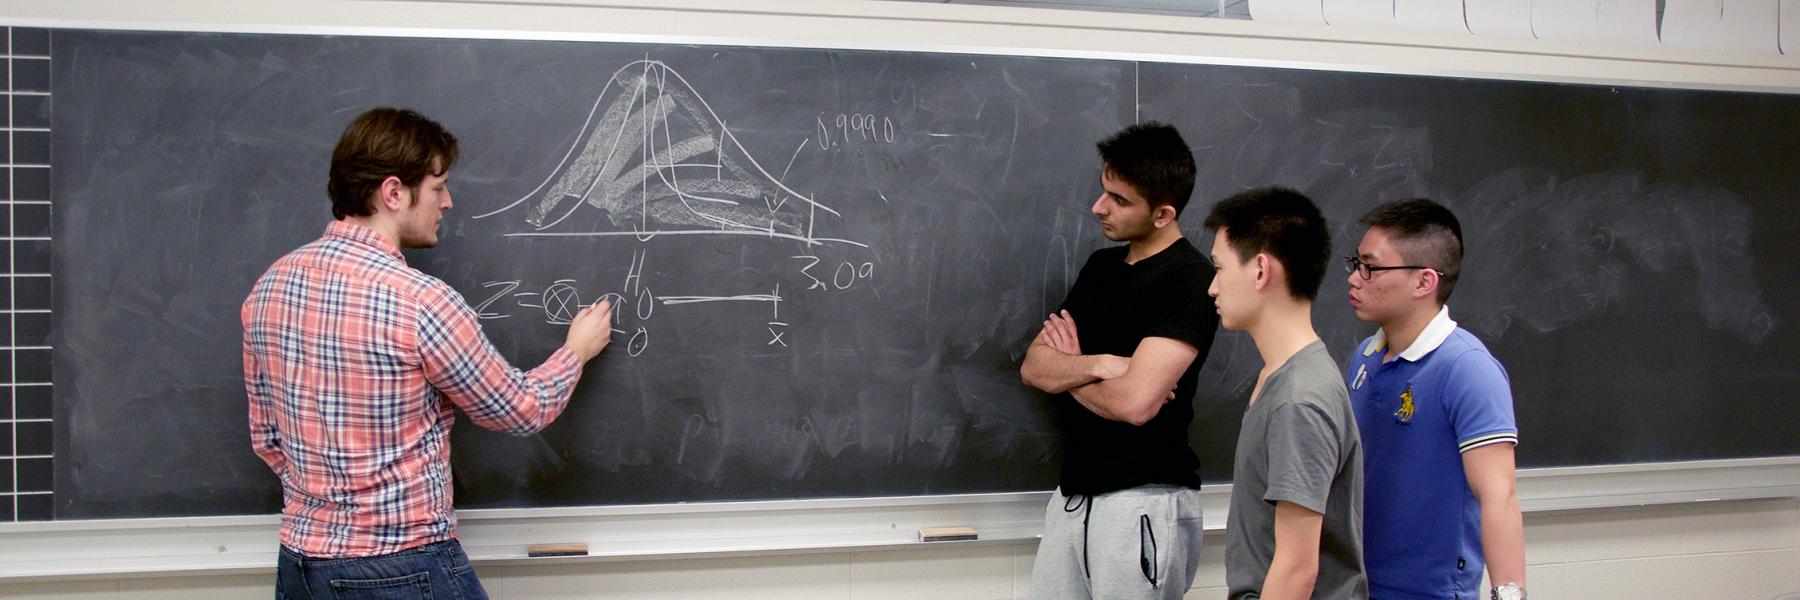 students at blackboard